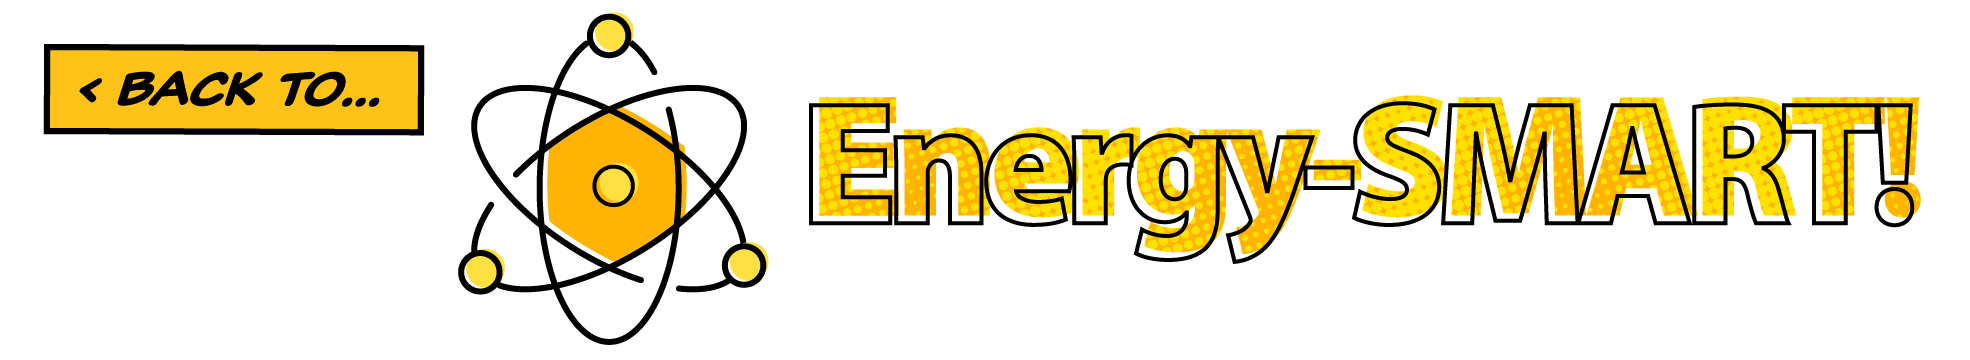 Back to… Energy-SMART!